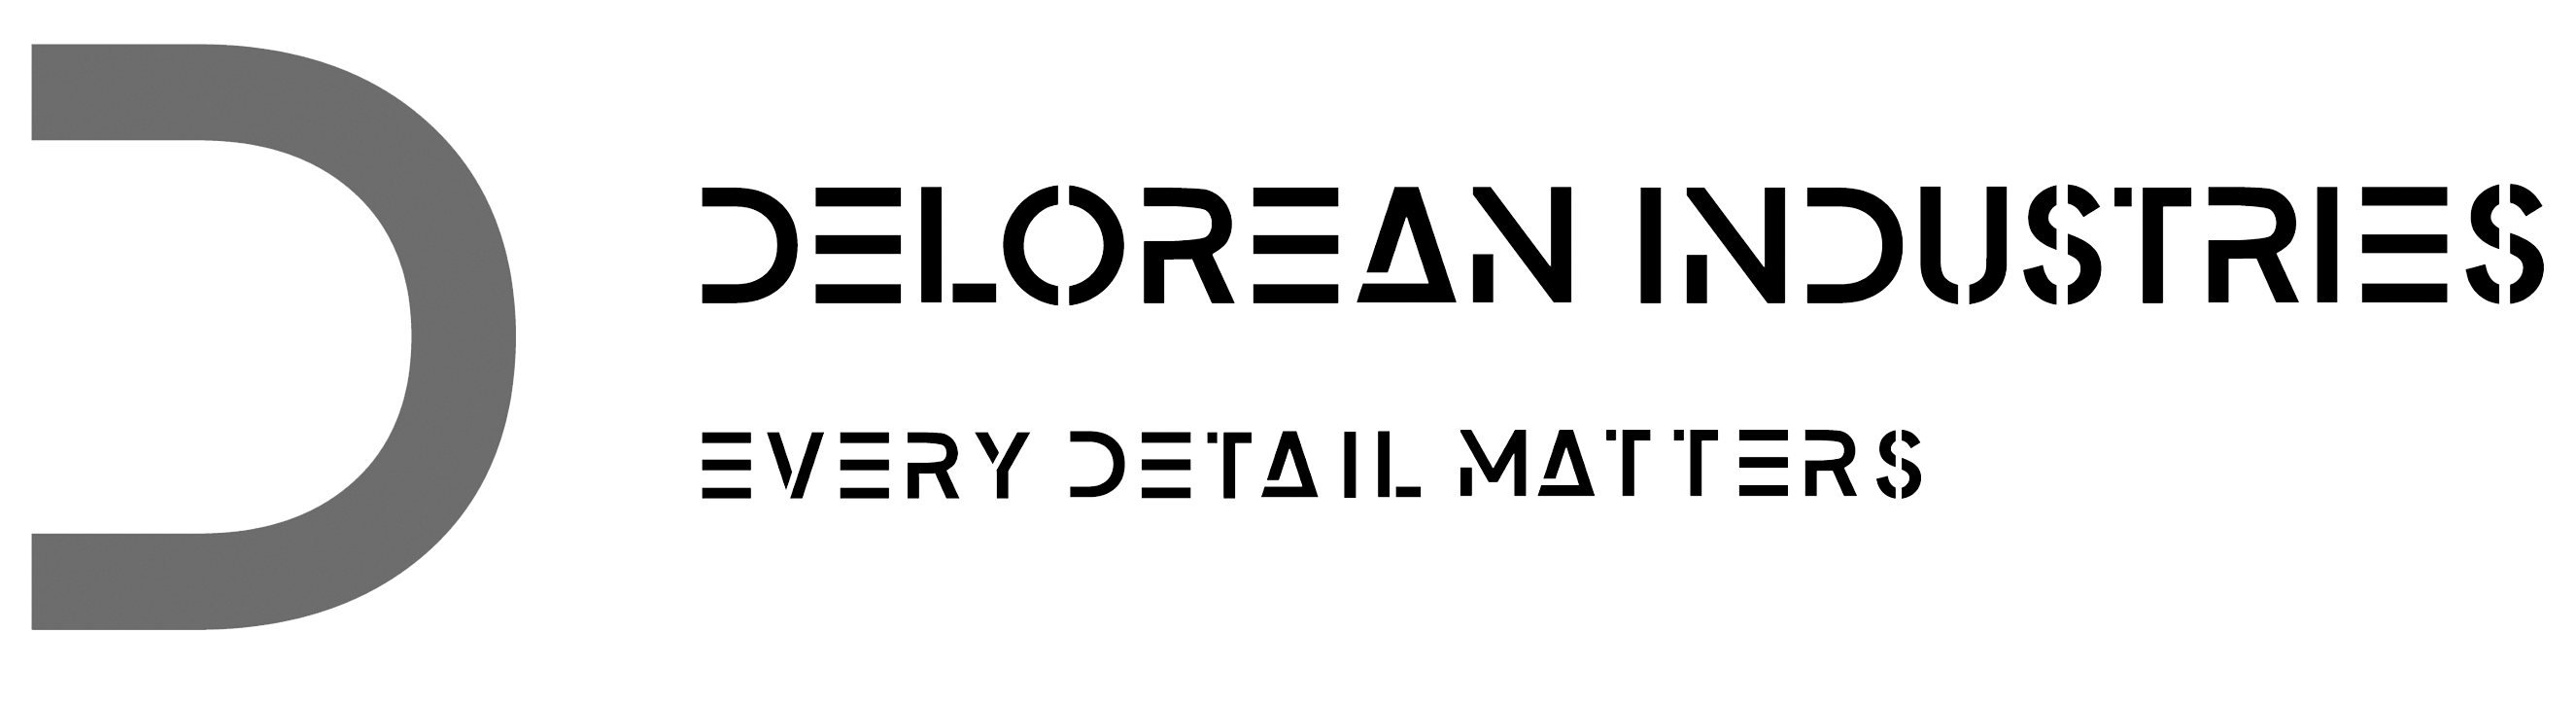 Delorean Industries